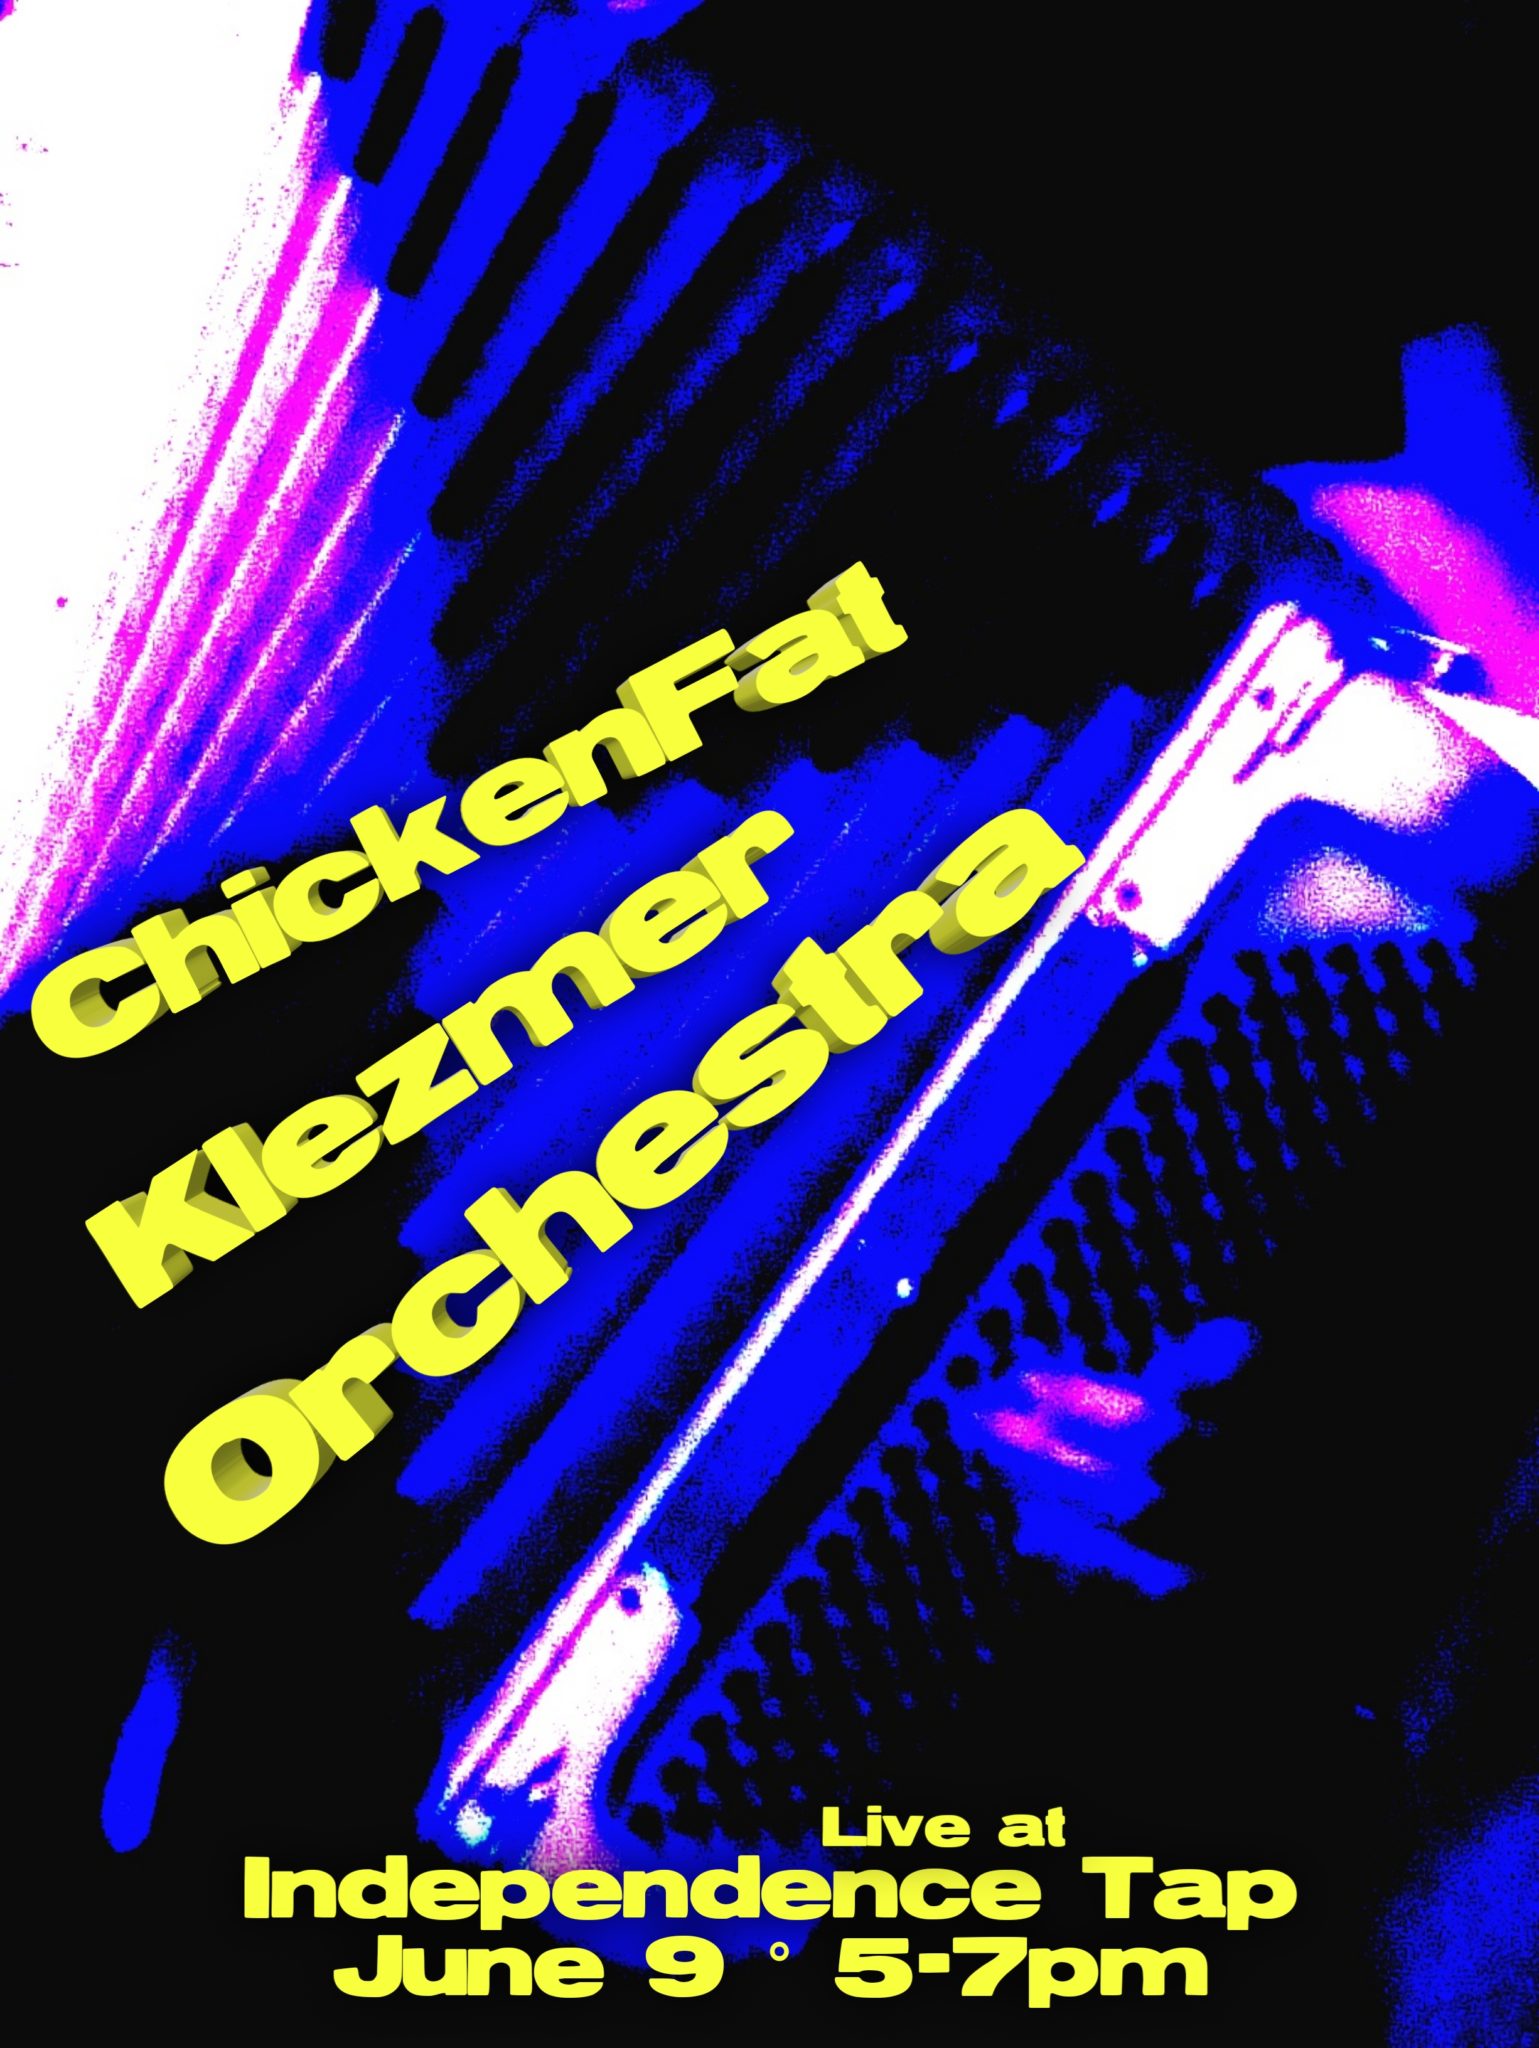 ChickenFat Klezmer Orchestra at Independence Tap June 9, 2019